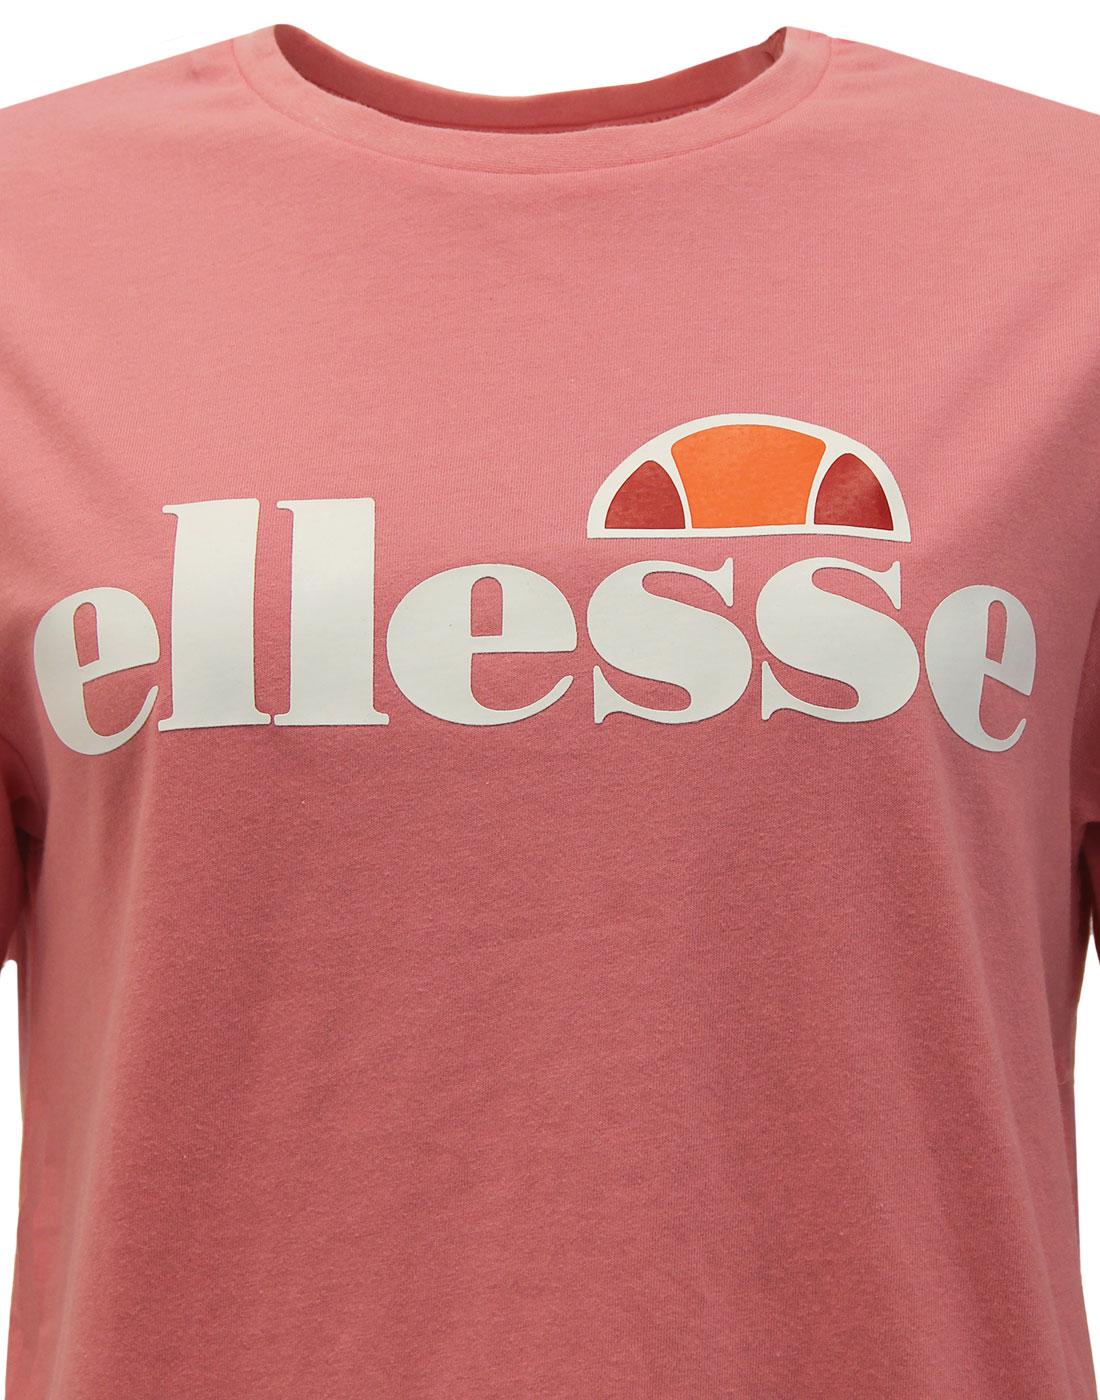 ELLESSE Albany Women's Retro 80s Boyfriend Fit T-Shirt Soft Pink